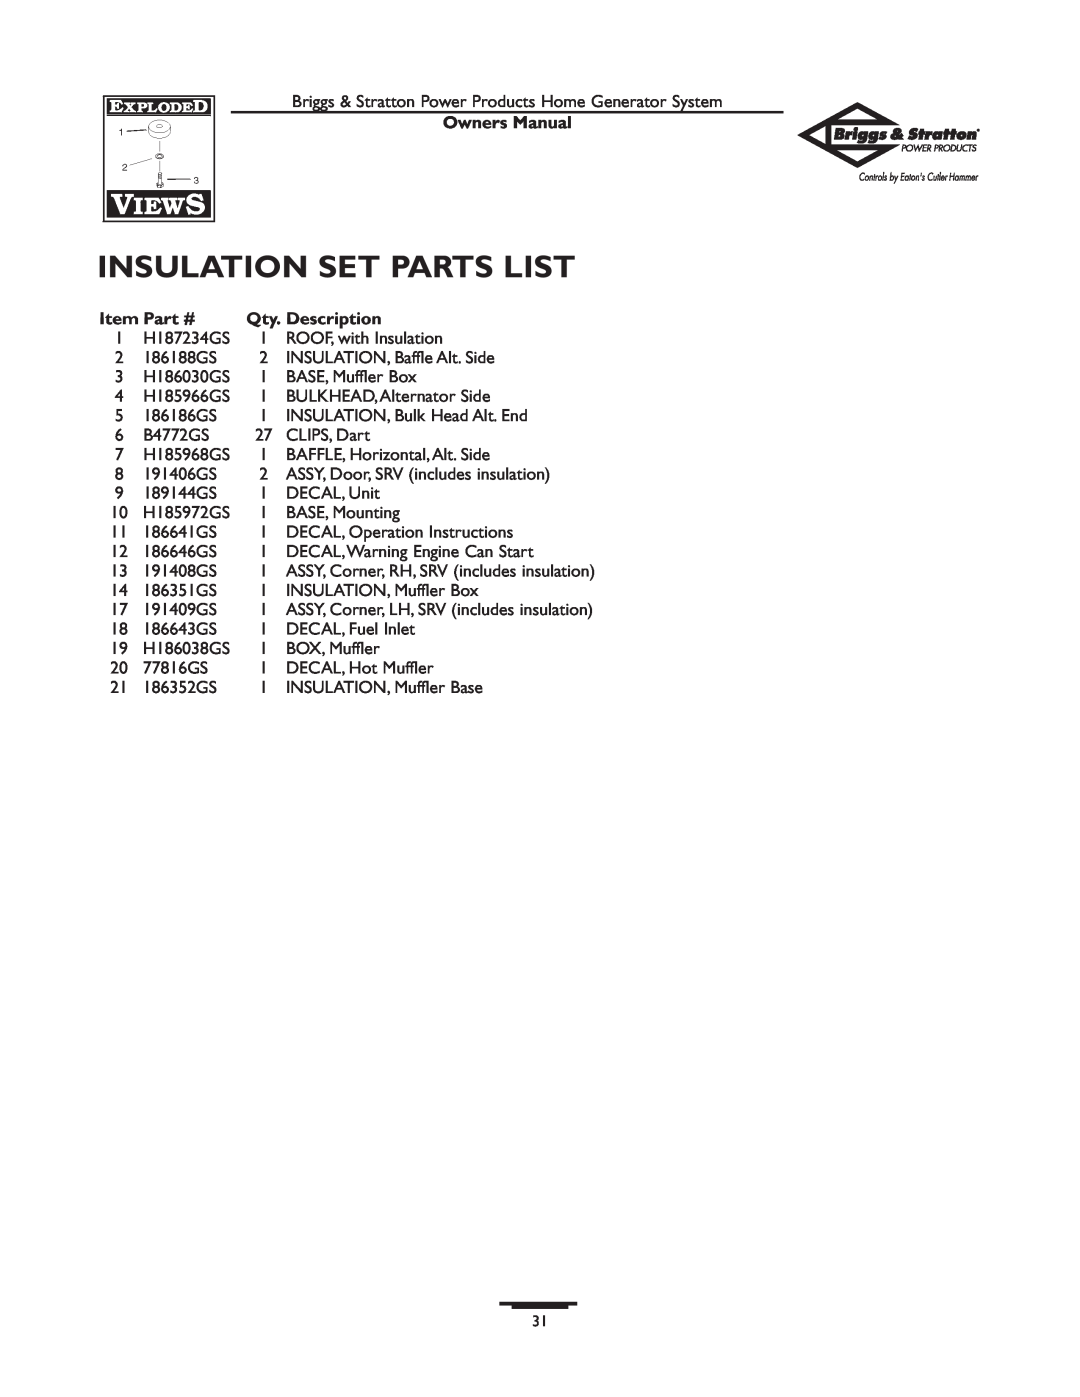 Briggs & Stratton 1679-0 owner manual Insulation Set Parts List, Owners Manual, Item Part #, Qty. Description 